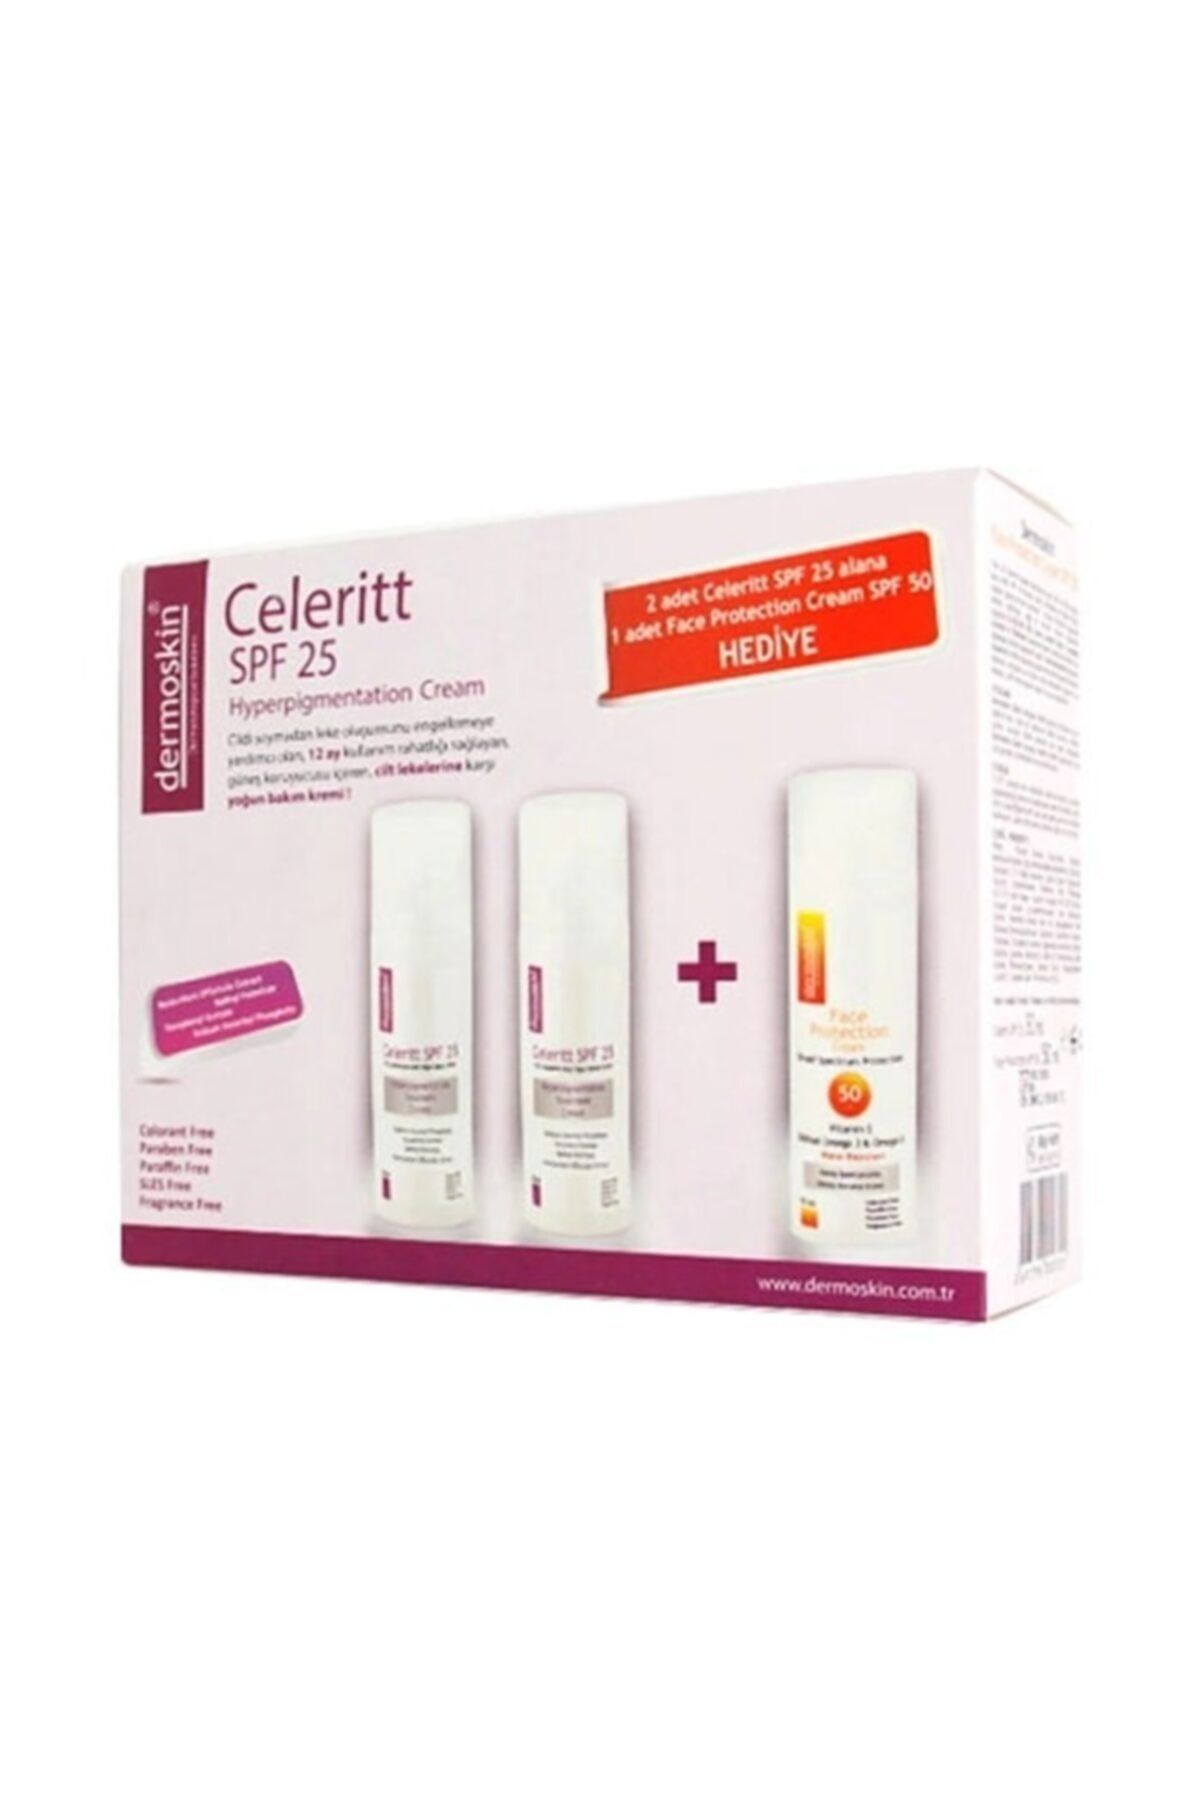 Dermoskin Celeritt Spf25 2 X 30ml - Face Protection Spf50 Cream 50 Ml Hediye